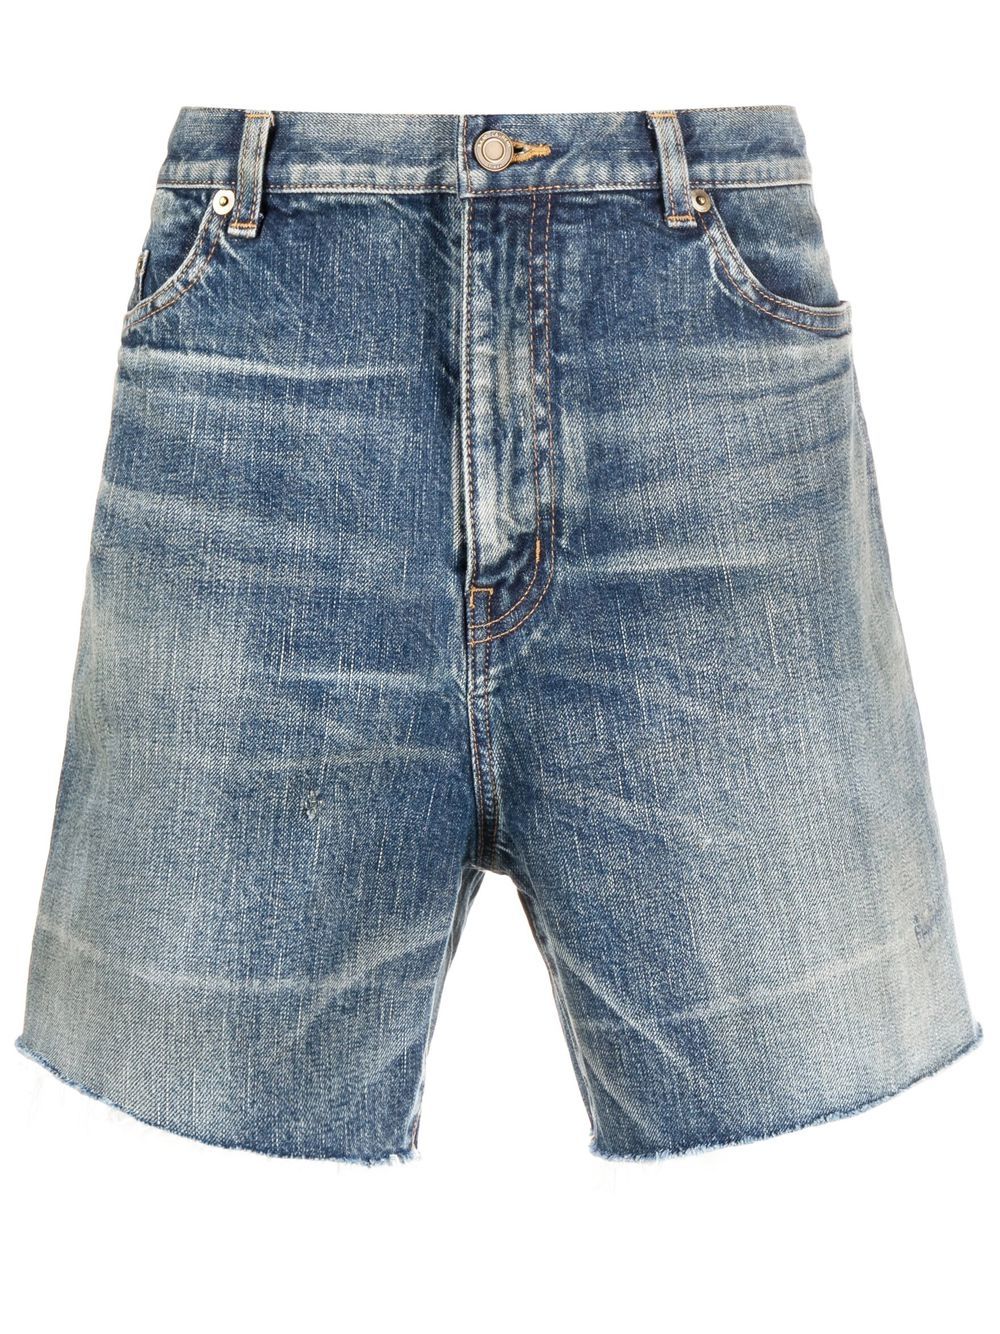 Saint Laurent distressed-effect denim shorts